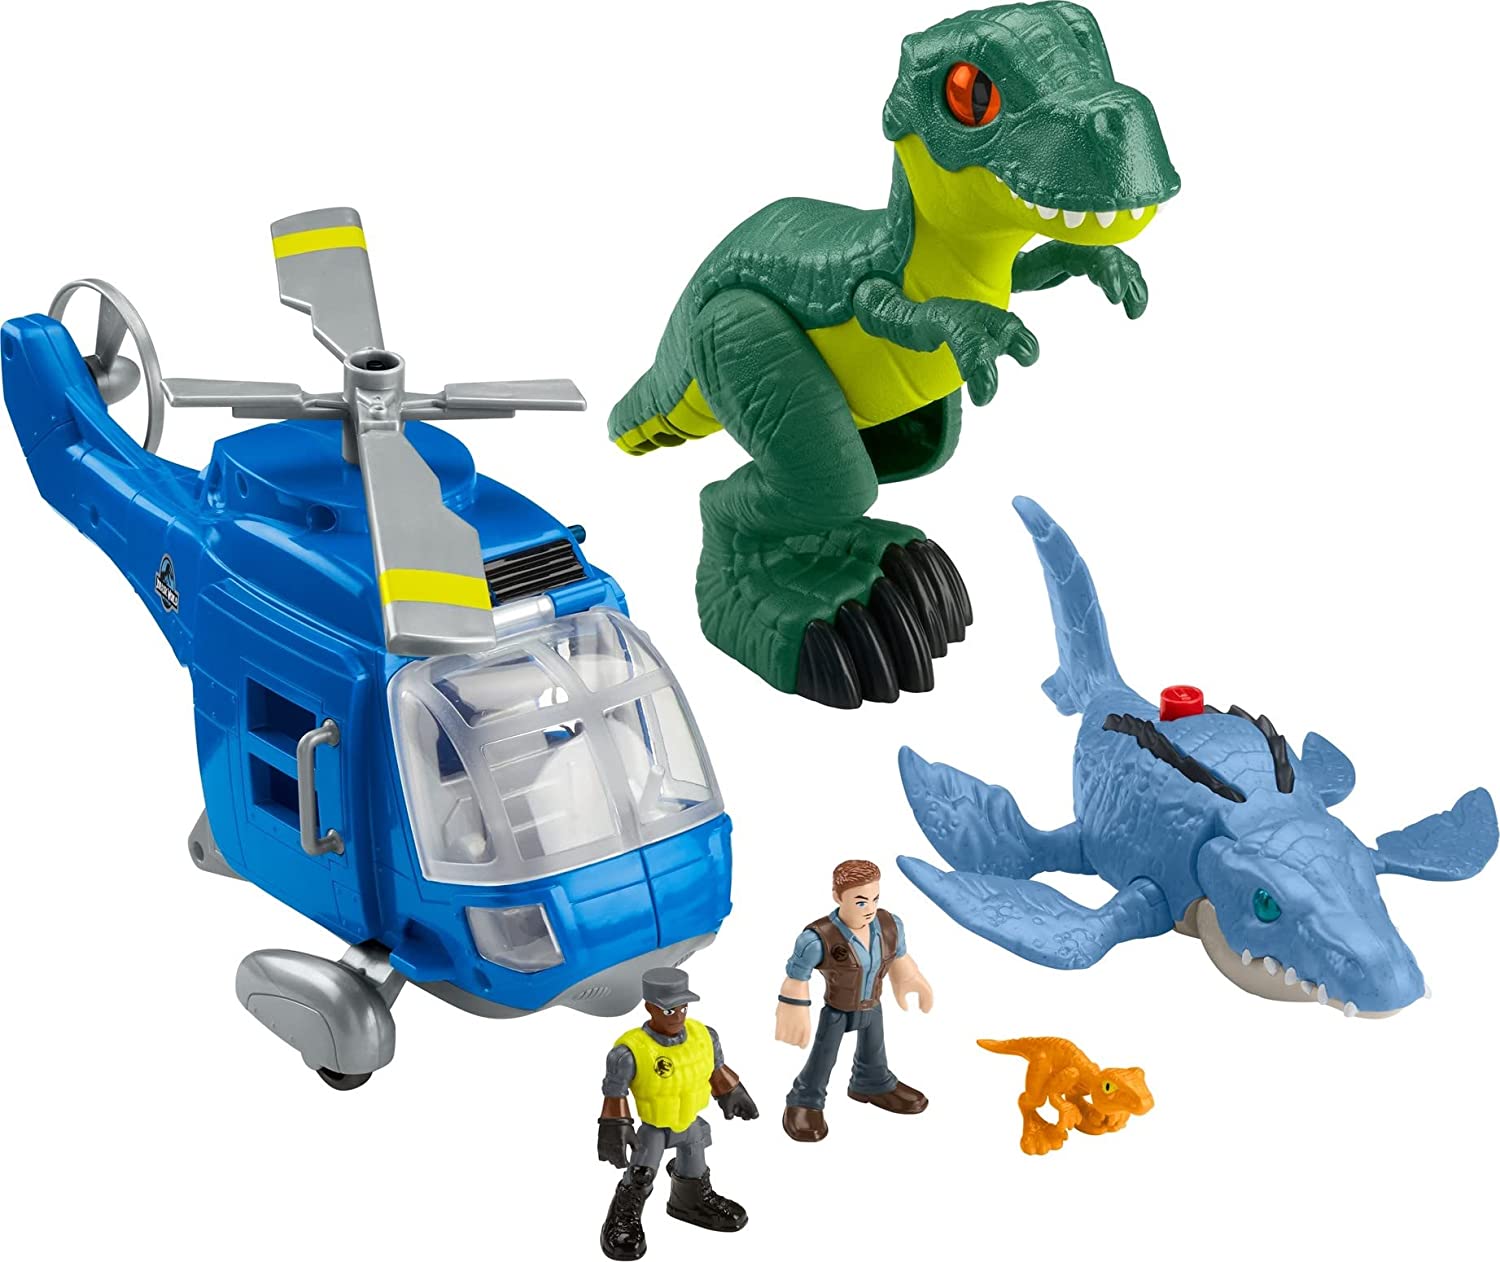 6-Pc Imaginext Jurassic World 7.9" T-Rex Dinosaur Figure & Chopper Vehicle Playset w/ Accessories $28.48 + Free Shipping